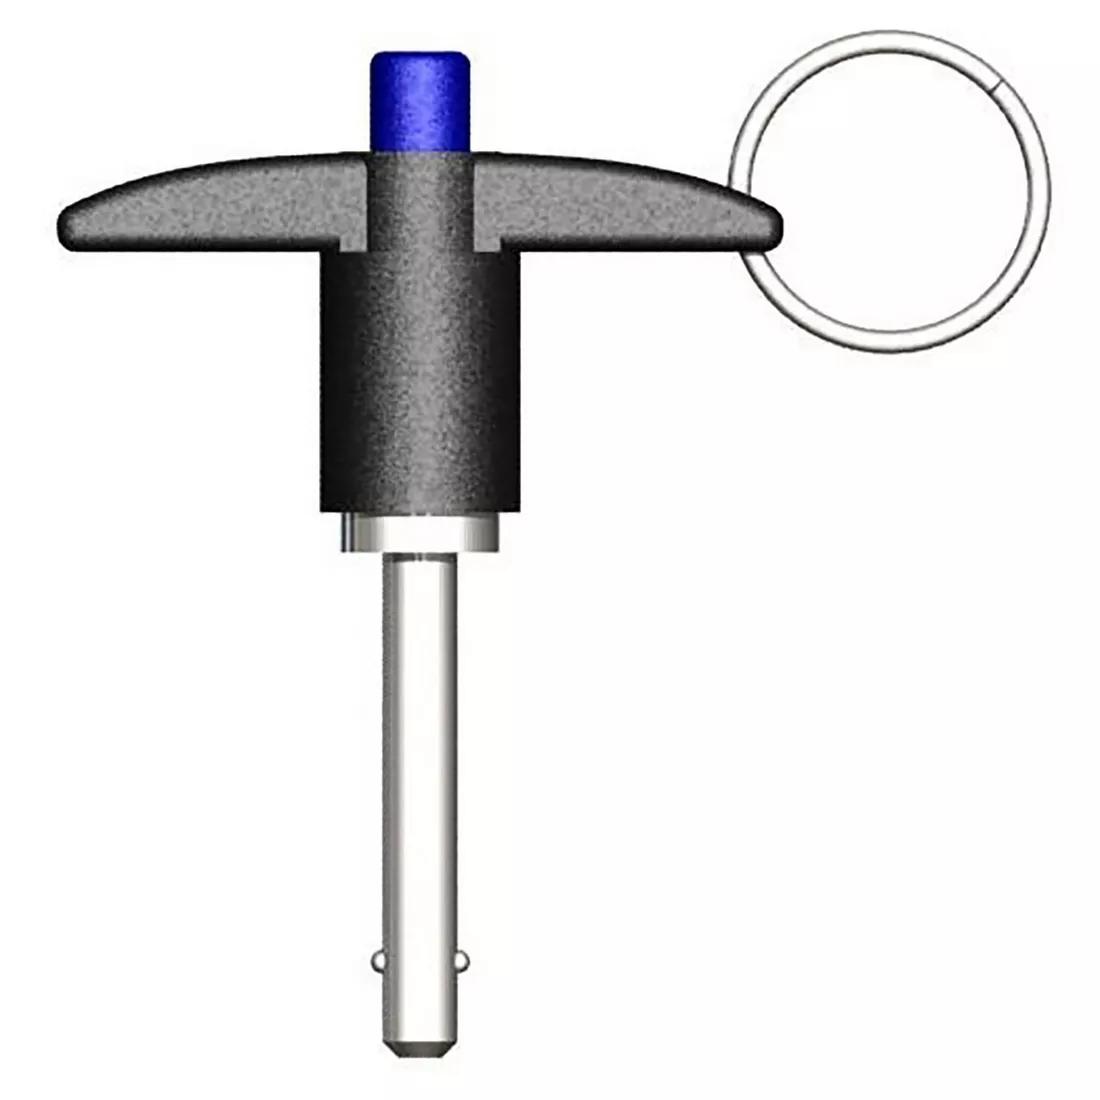 T-Handle Ball Lock Pin